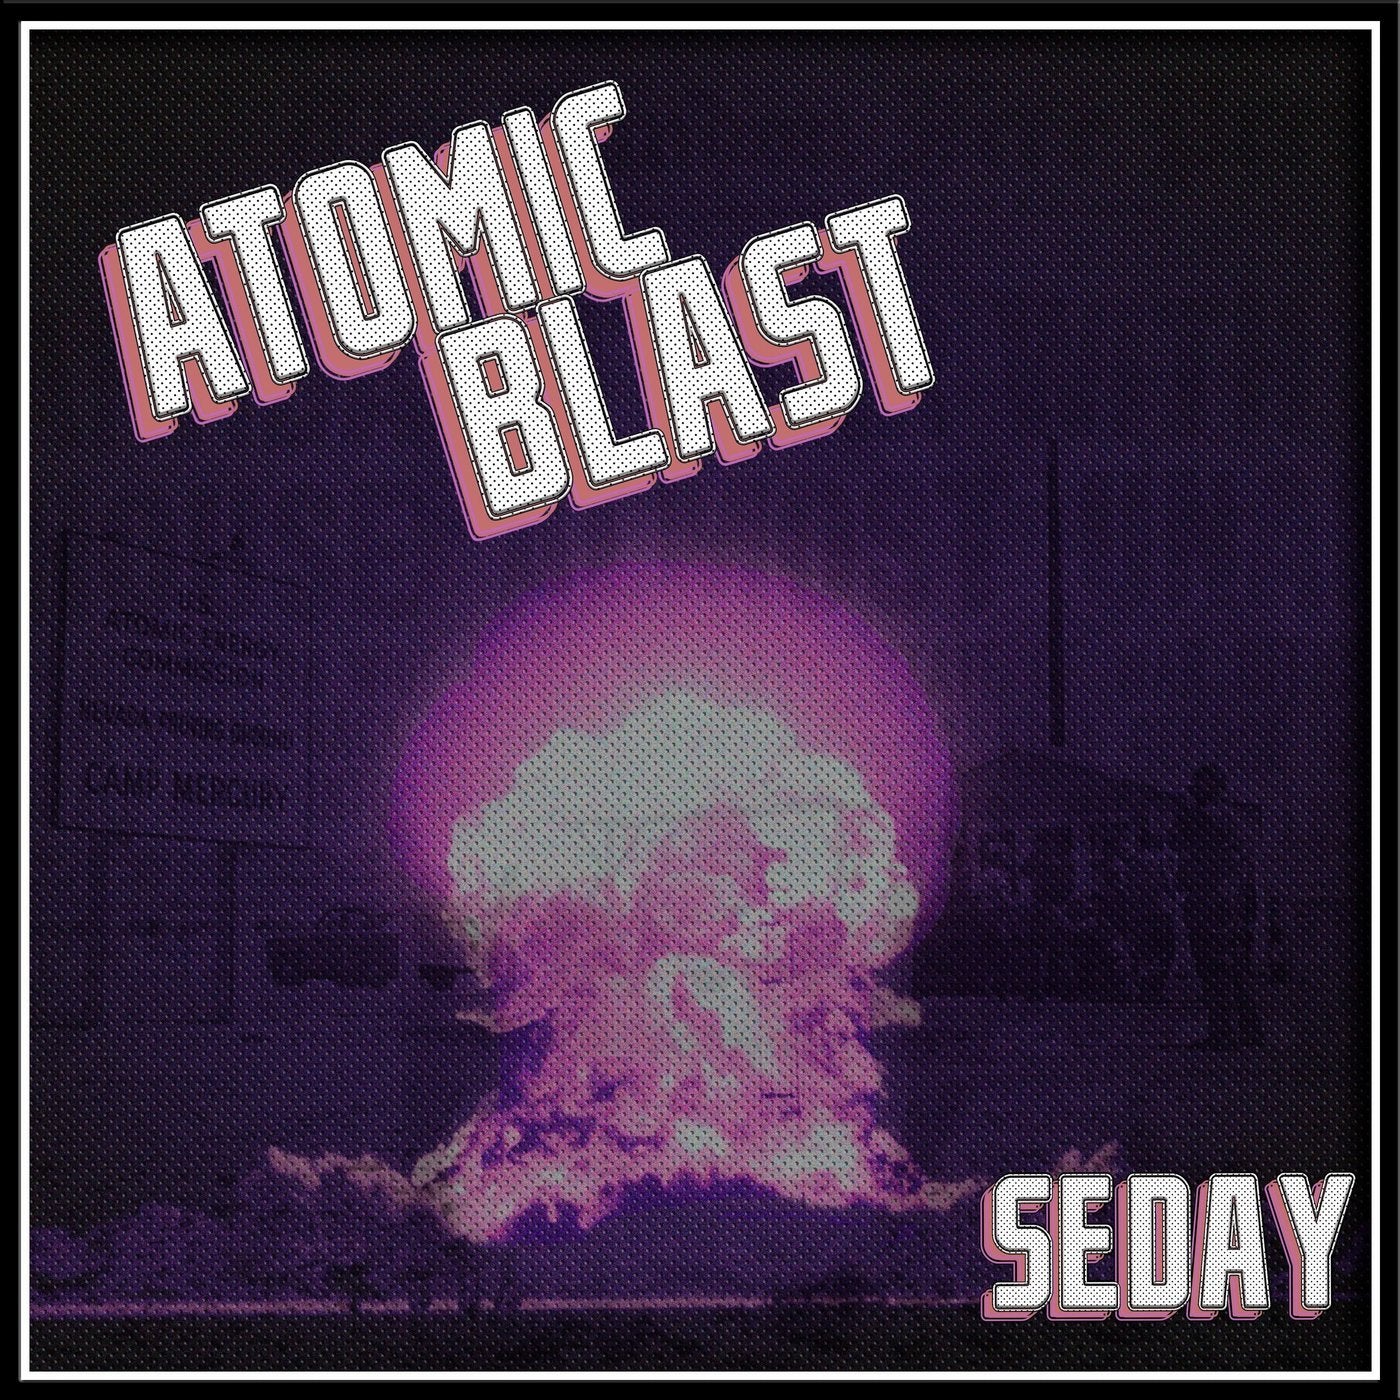 SEDAY music download - Beatport